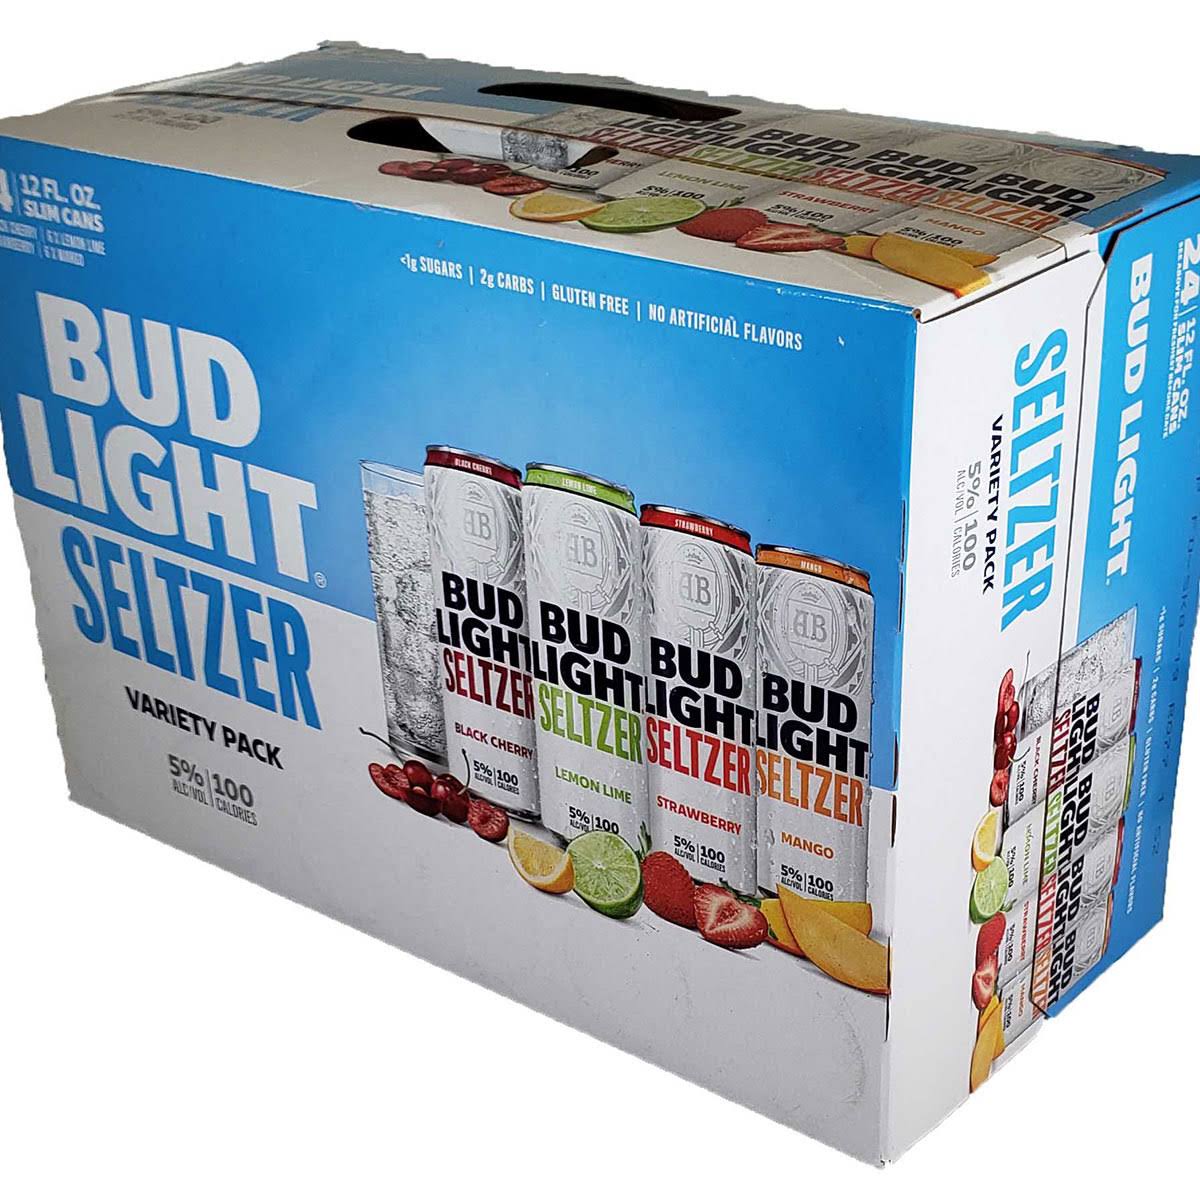 Bud Light Seltzer Seltzer, Variety Pack - 24 pack, 12 fl oz slim cans